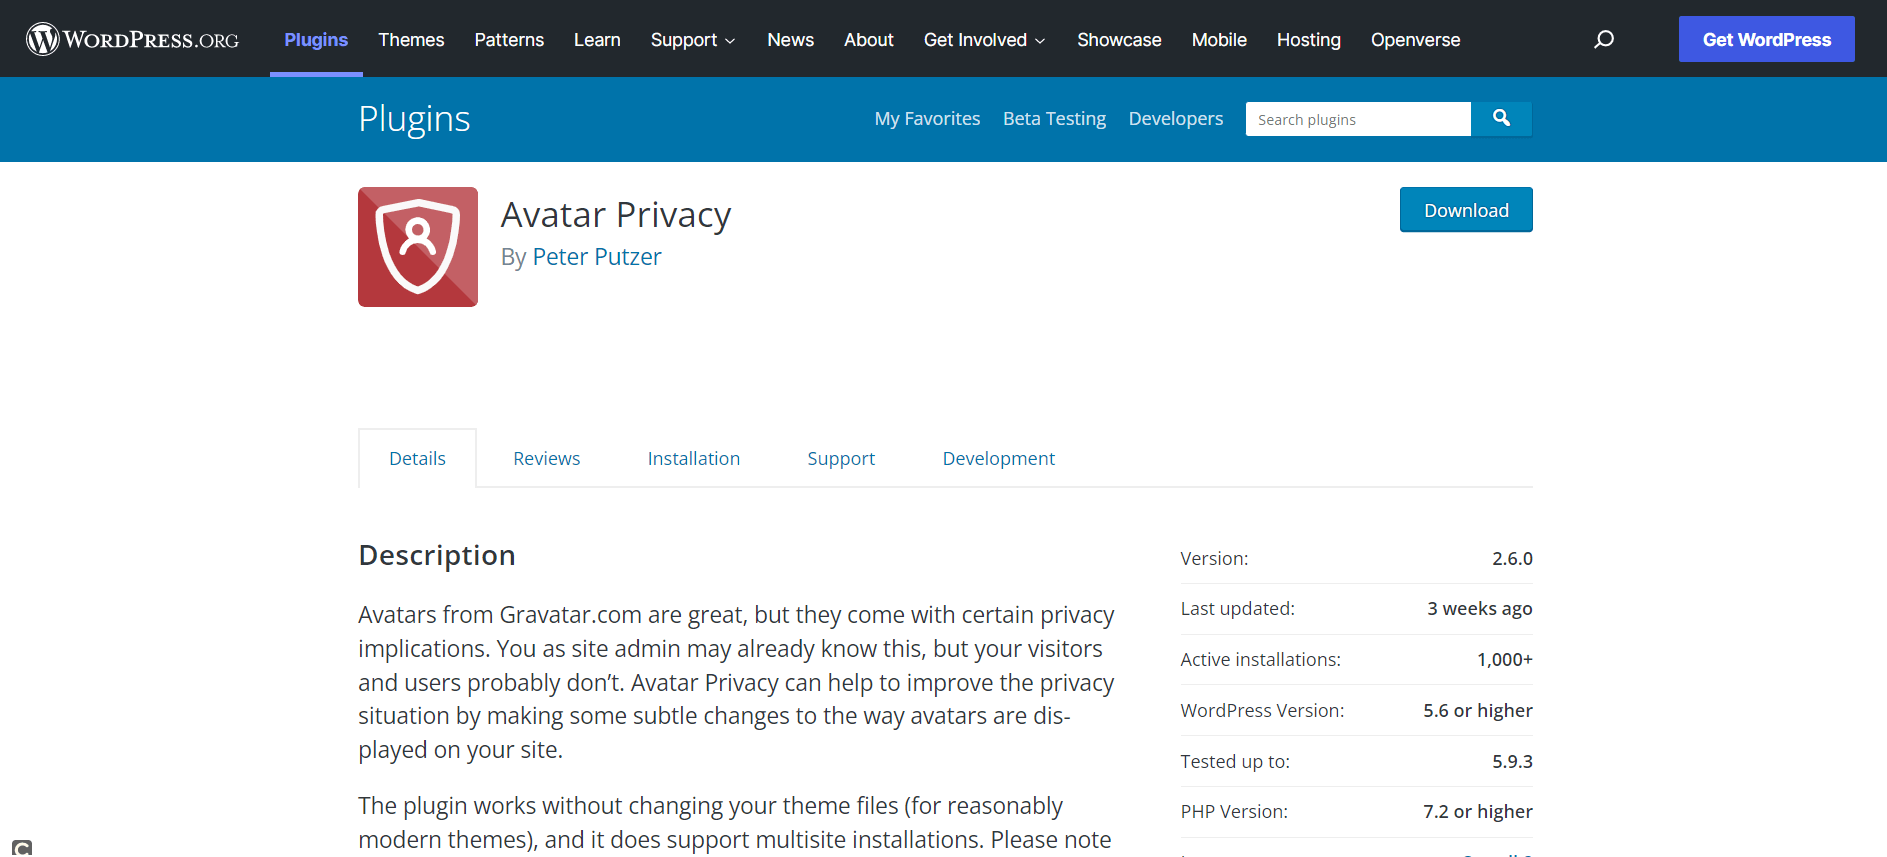 Avatar Privacy website